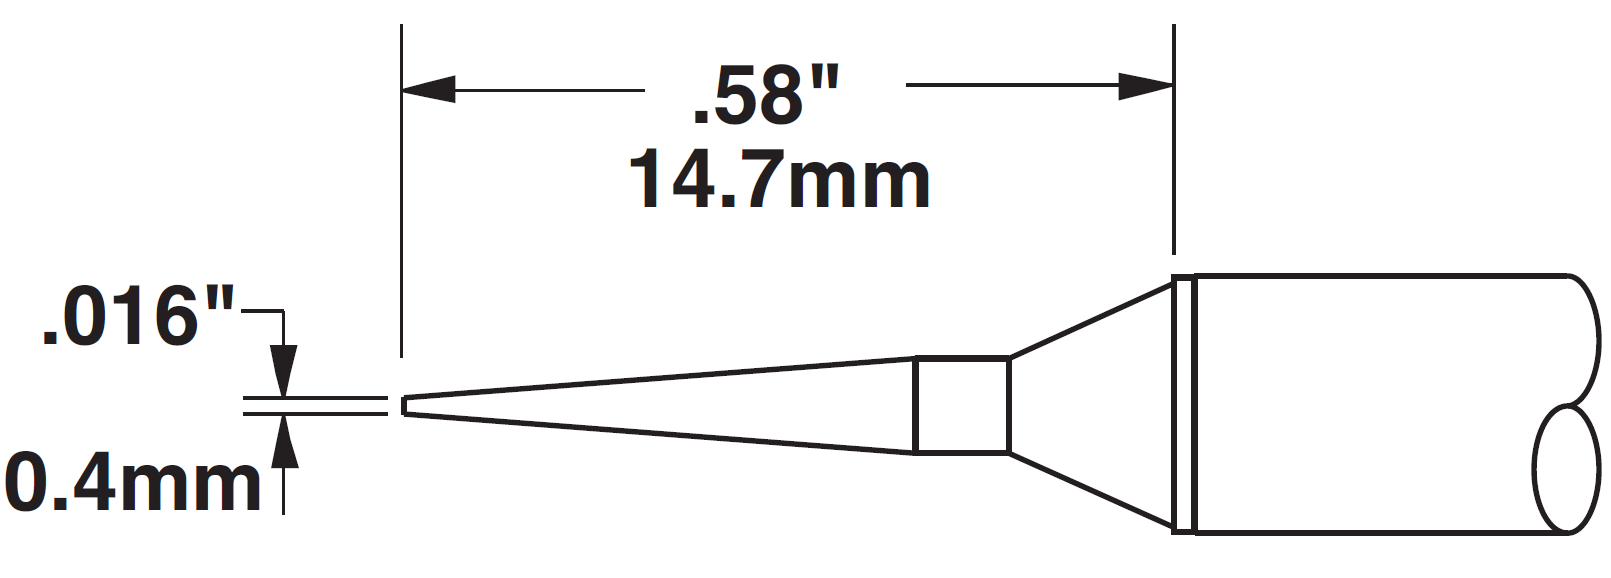 Картридж-наконечник для MX, конус удлиненный 0.4х14.7мм